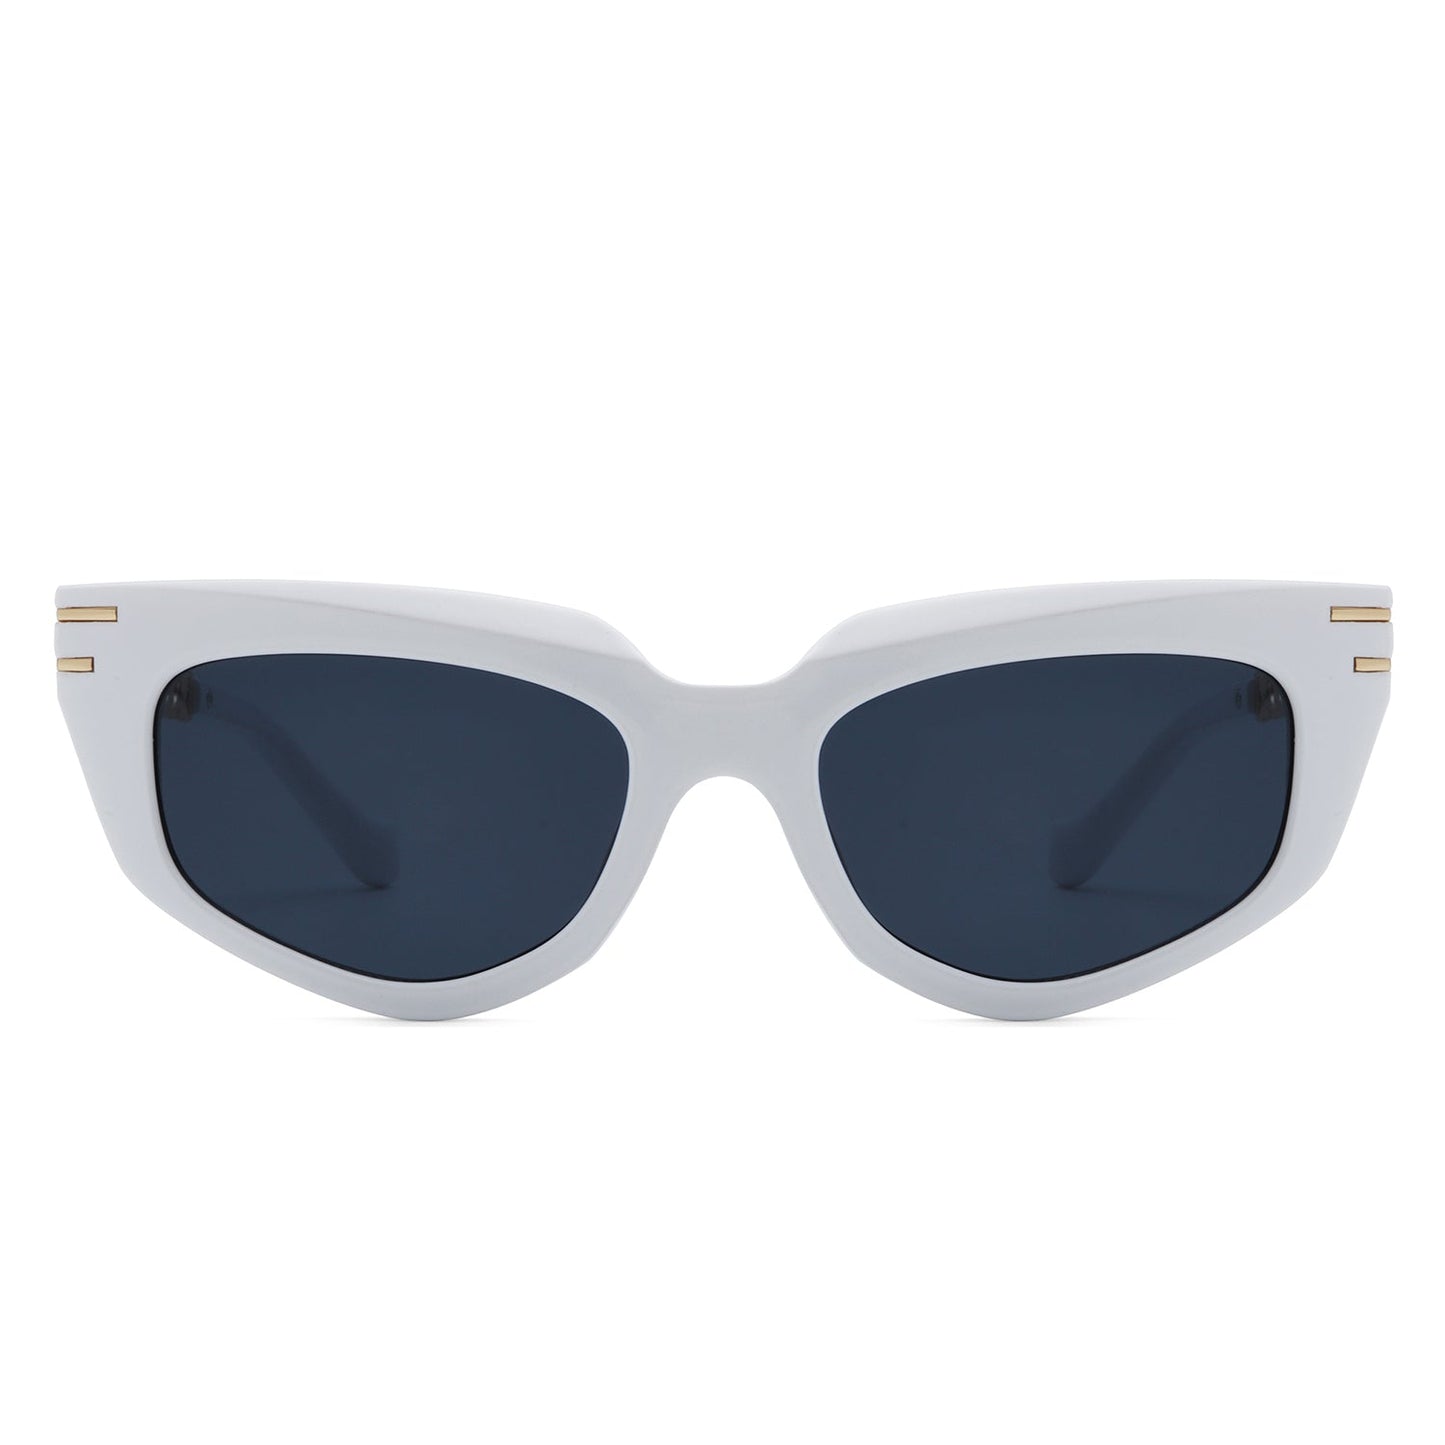 Skylight - Women Chic Chain Link Design Fashion Cat Eye Sunglasses-13